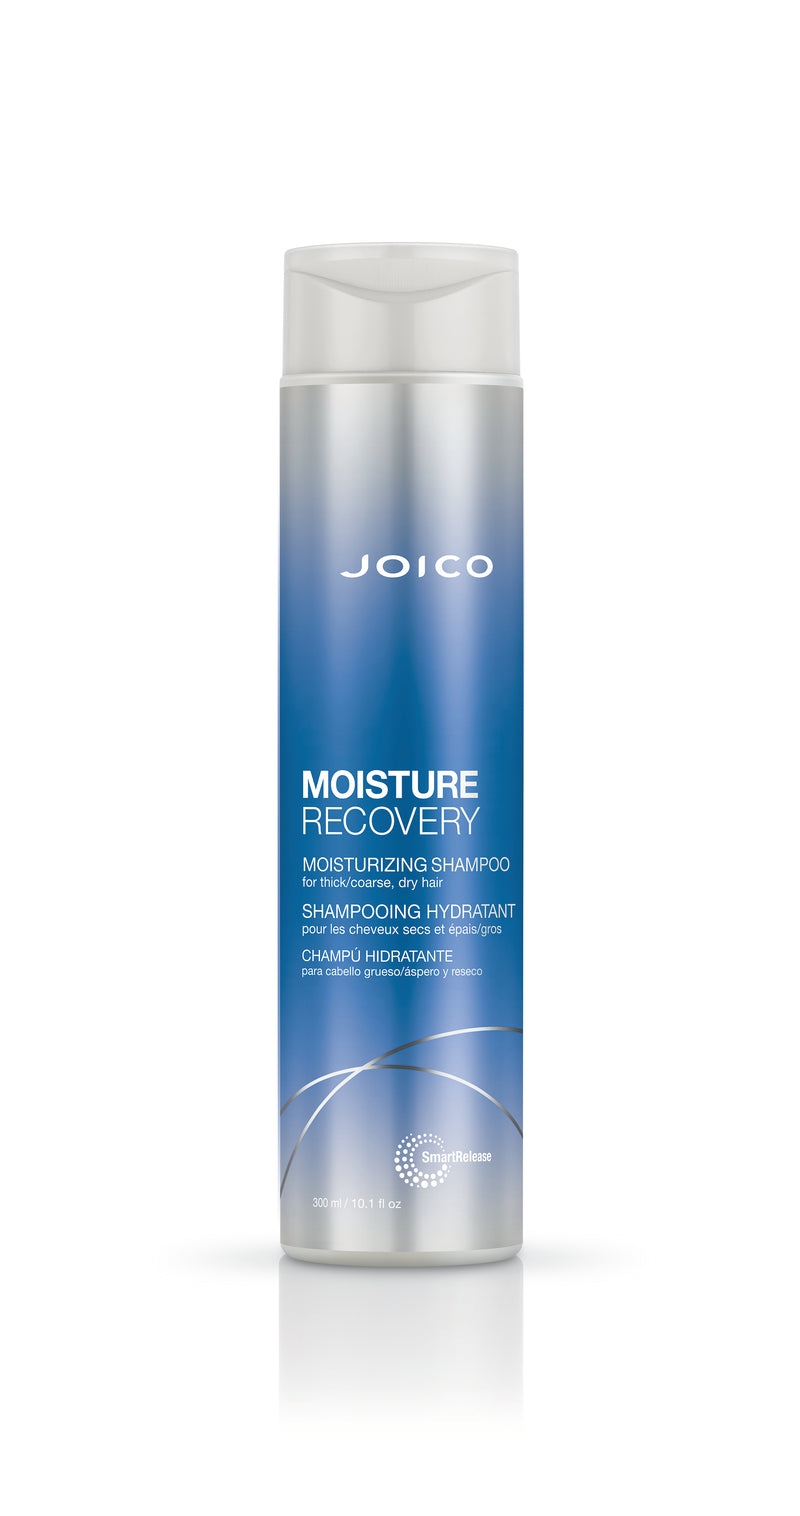 Joico MOISTURE RECOVERY Shampoo (300mL)